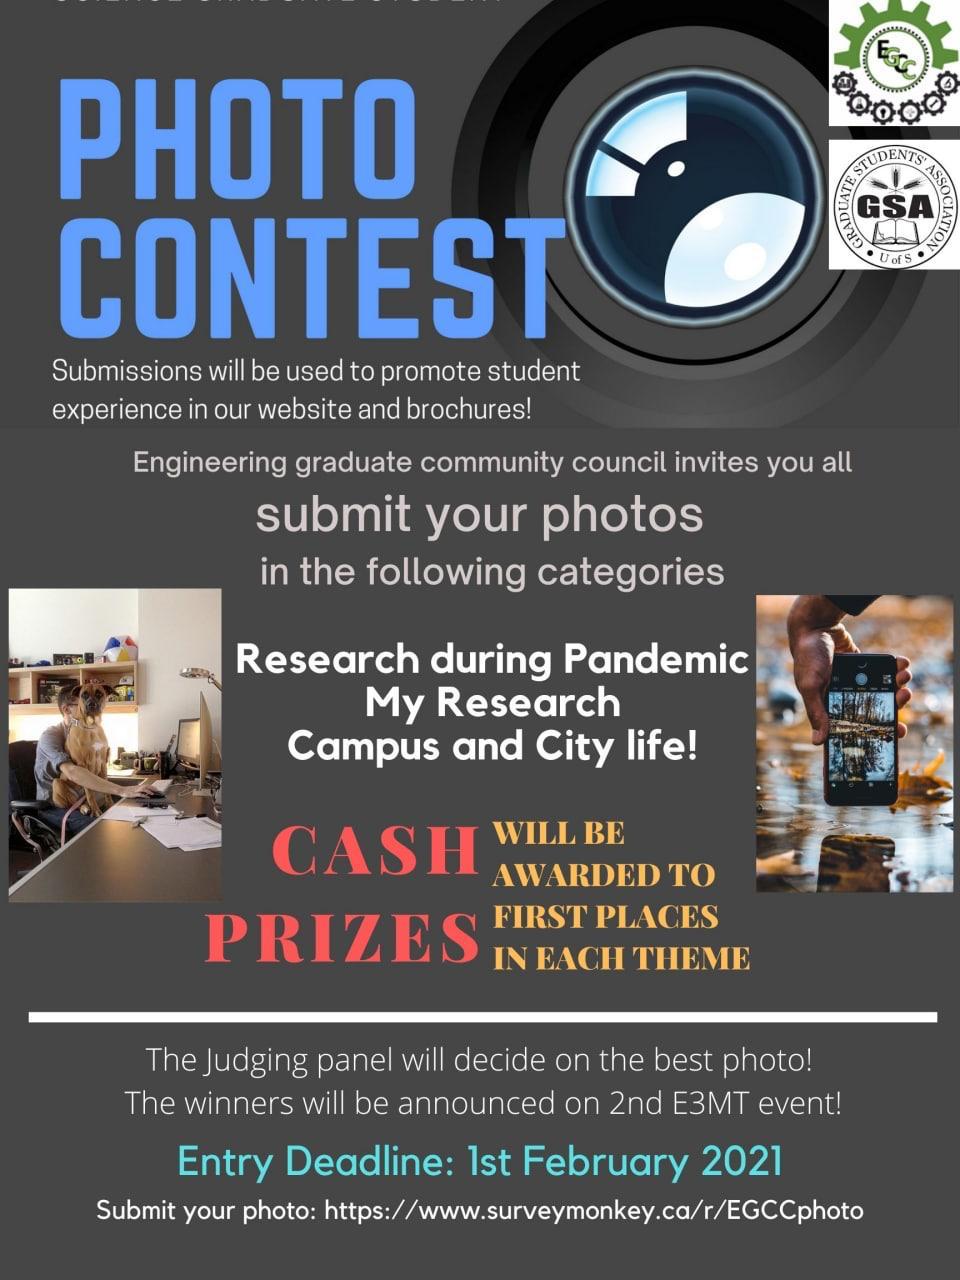 photo-contest-poster.jpg